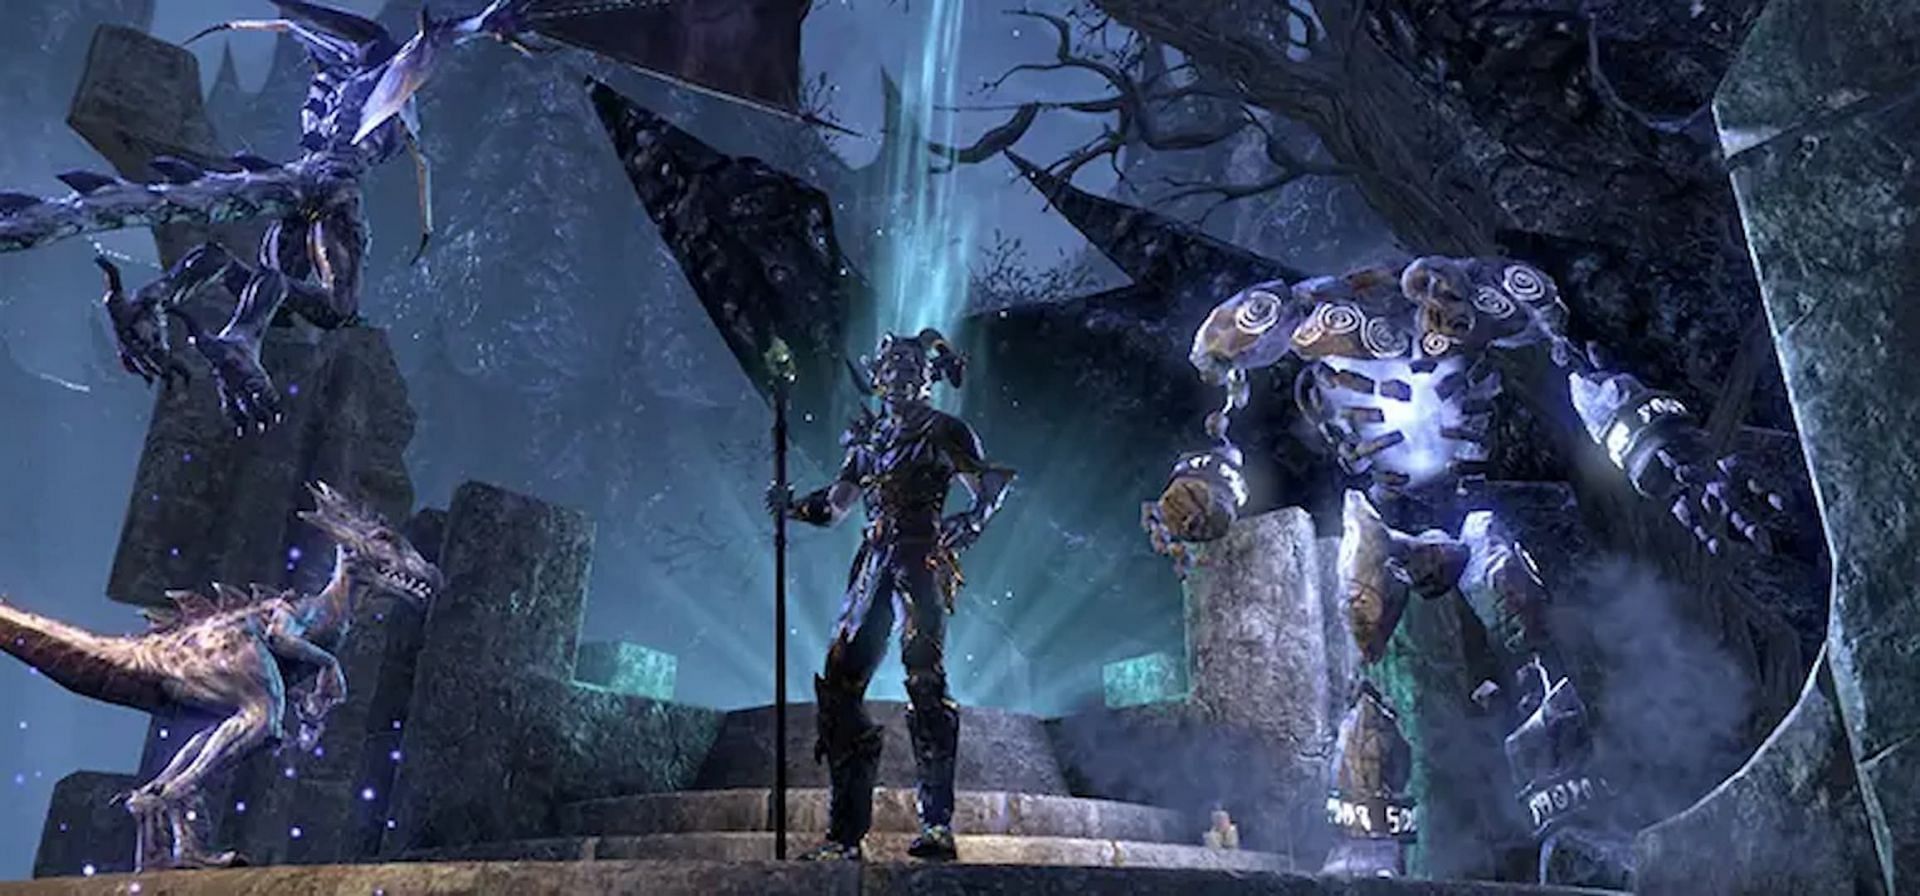 The Sorcerer can summon Daedric familiars to assist in battle (Image via ZeniMax Online Studios)